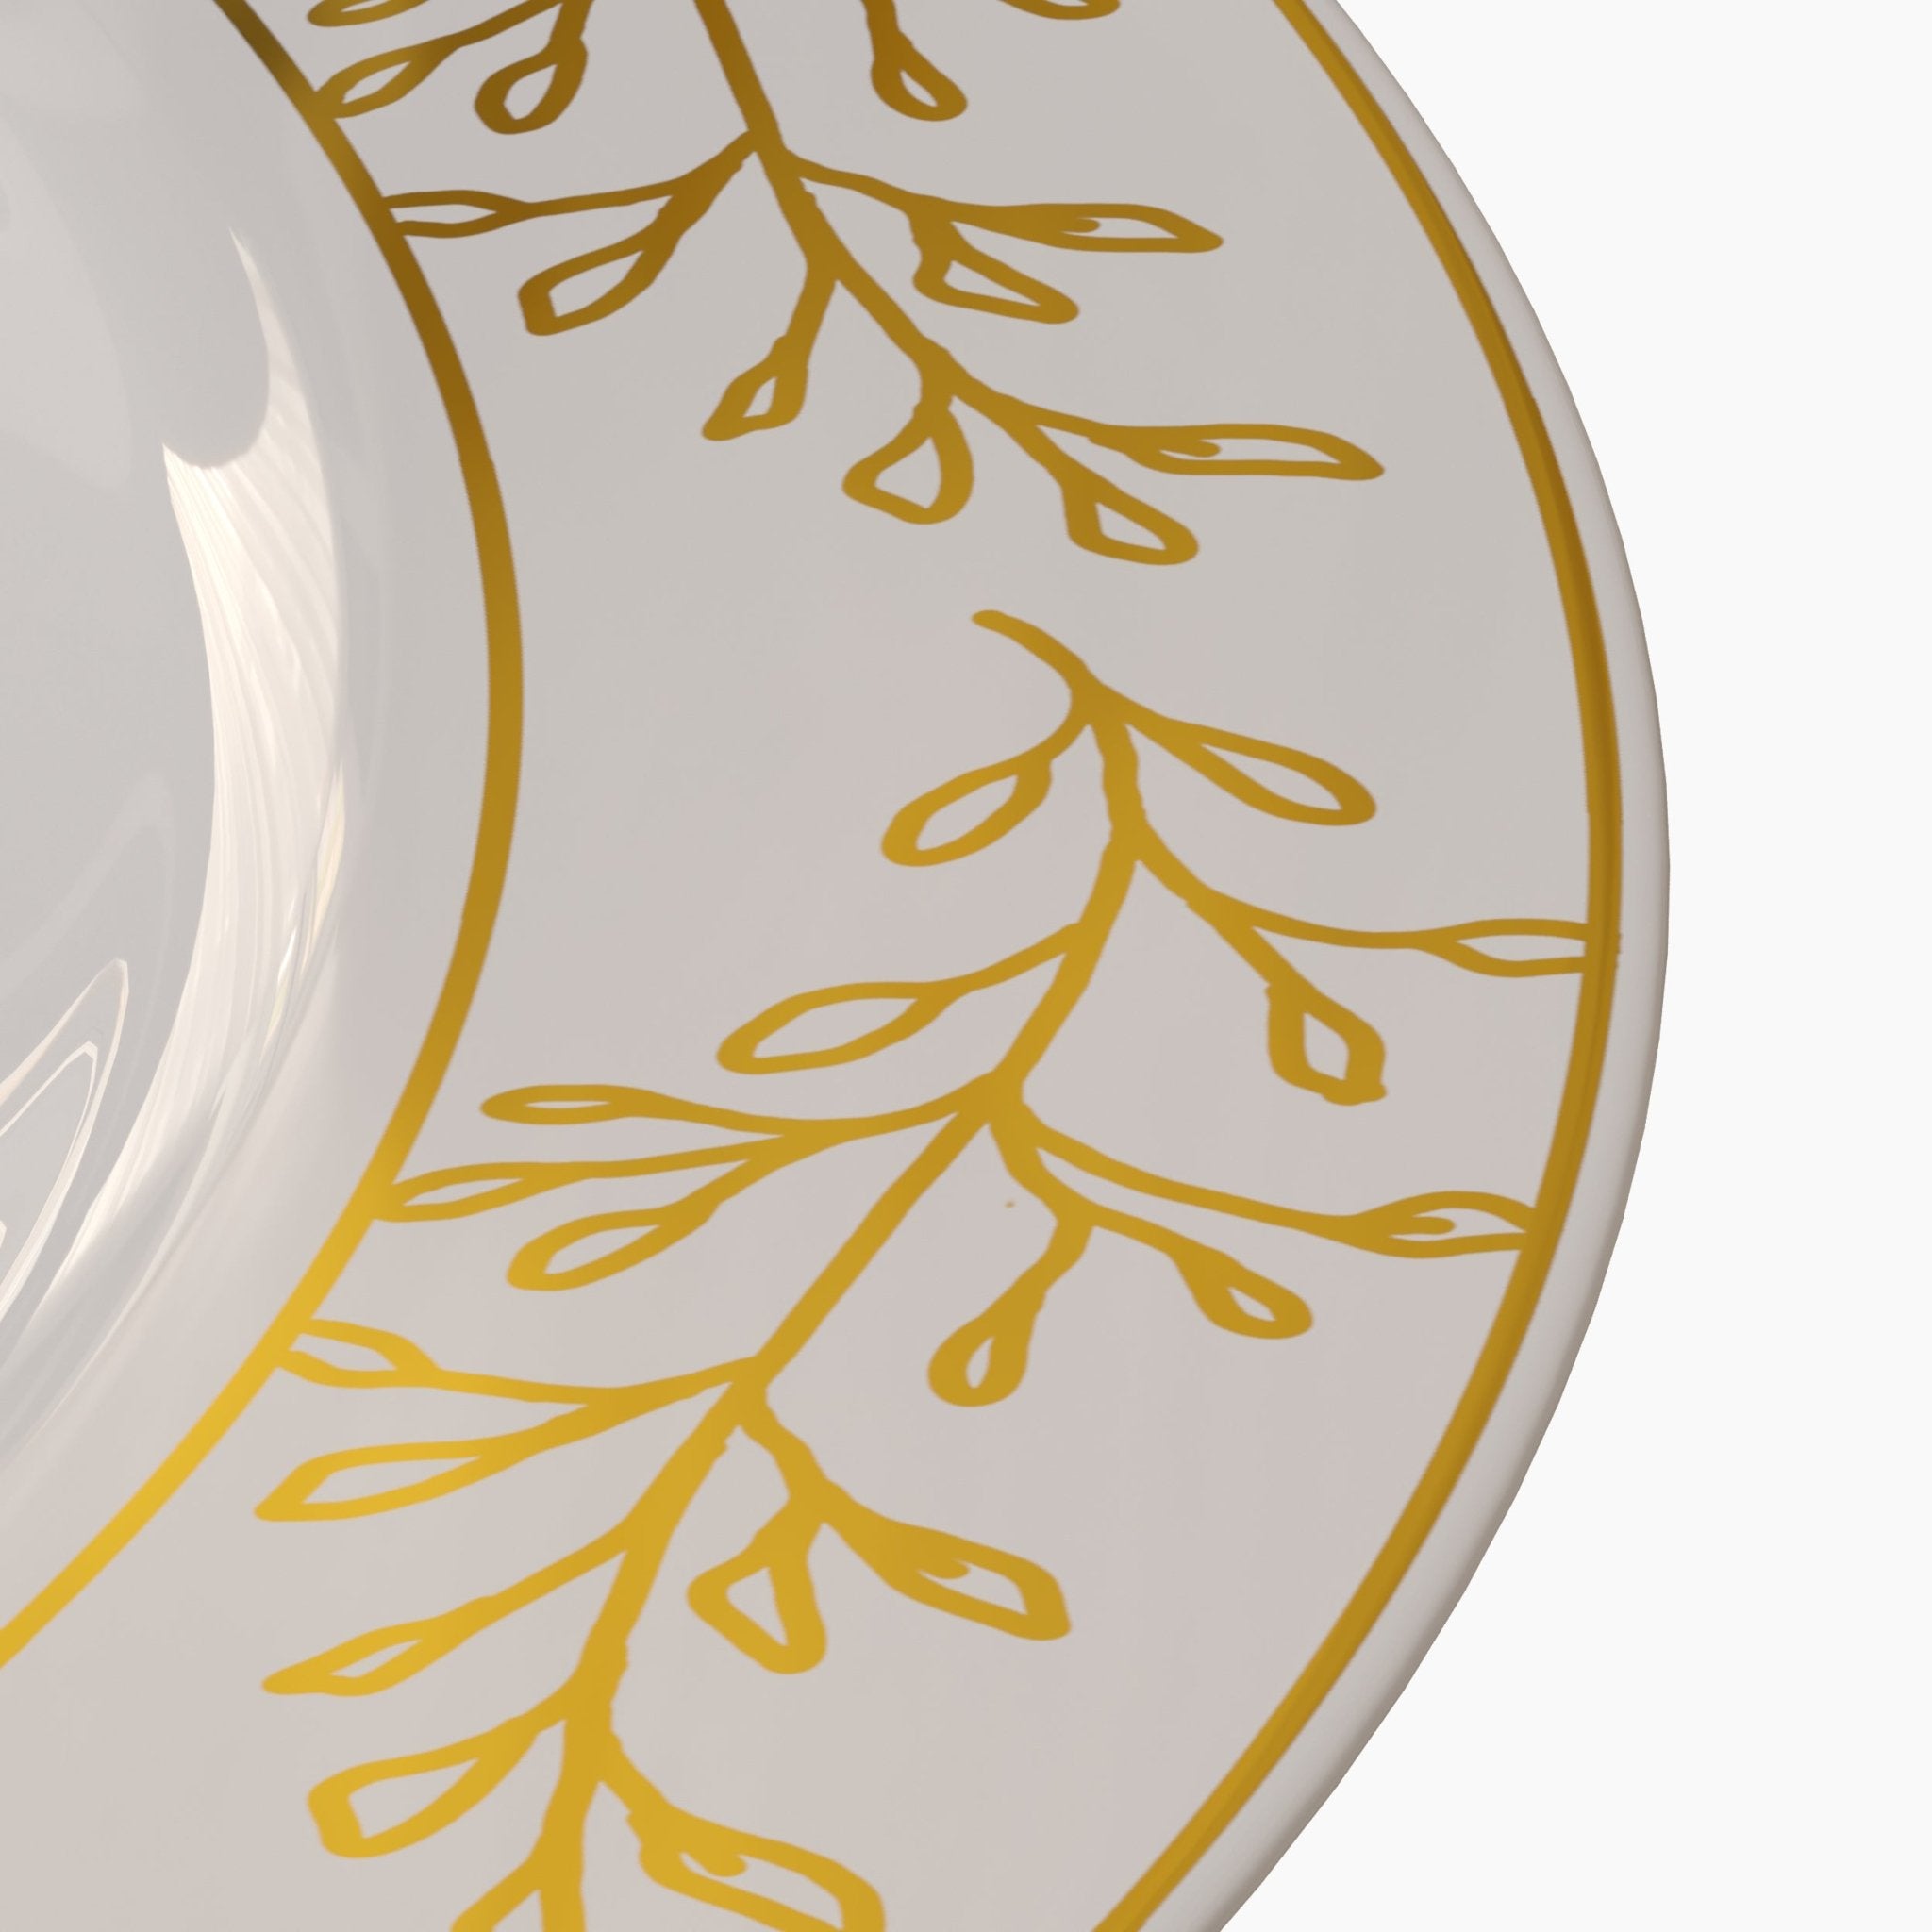 7.5" Gold Leaf Design Plastic Plates (120 Count)